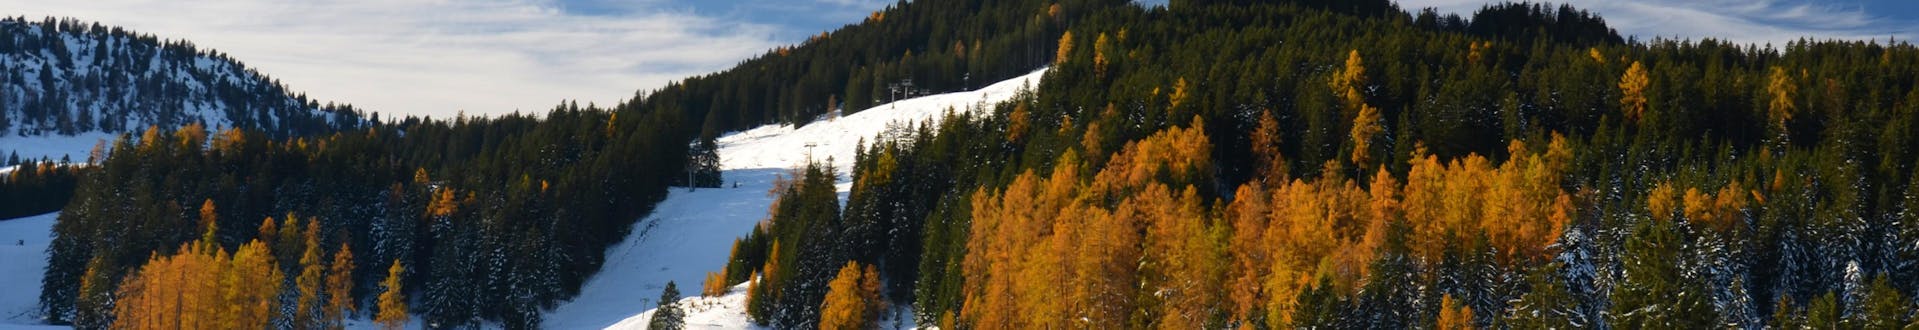 The ski slopes of Brand - Brandnertal ski resort, where you can book online ski lessons.